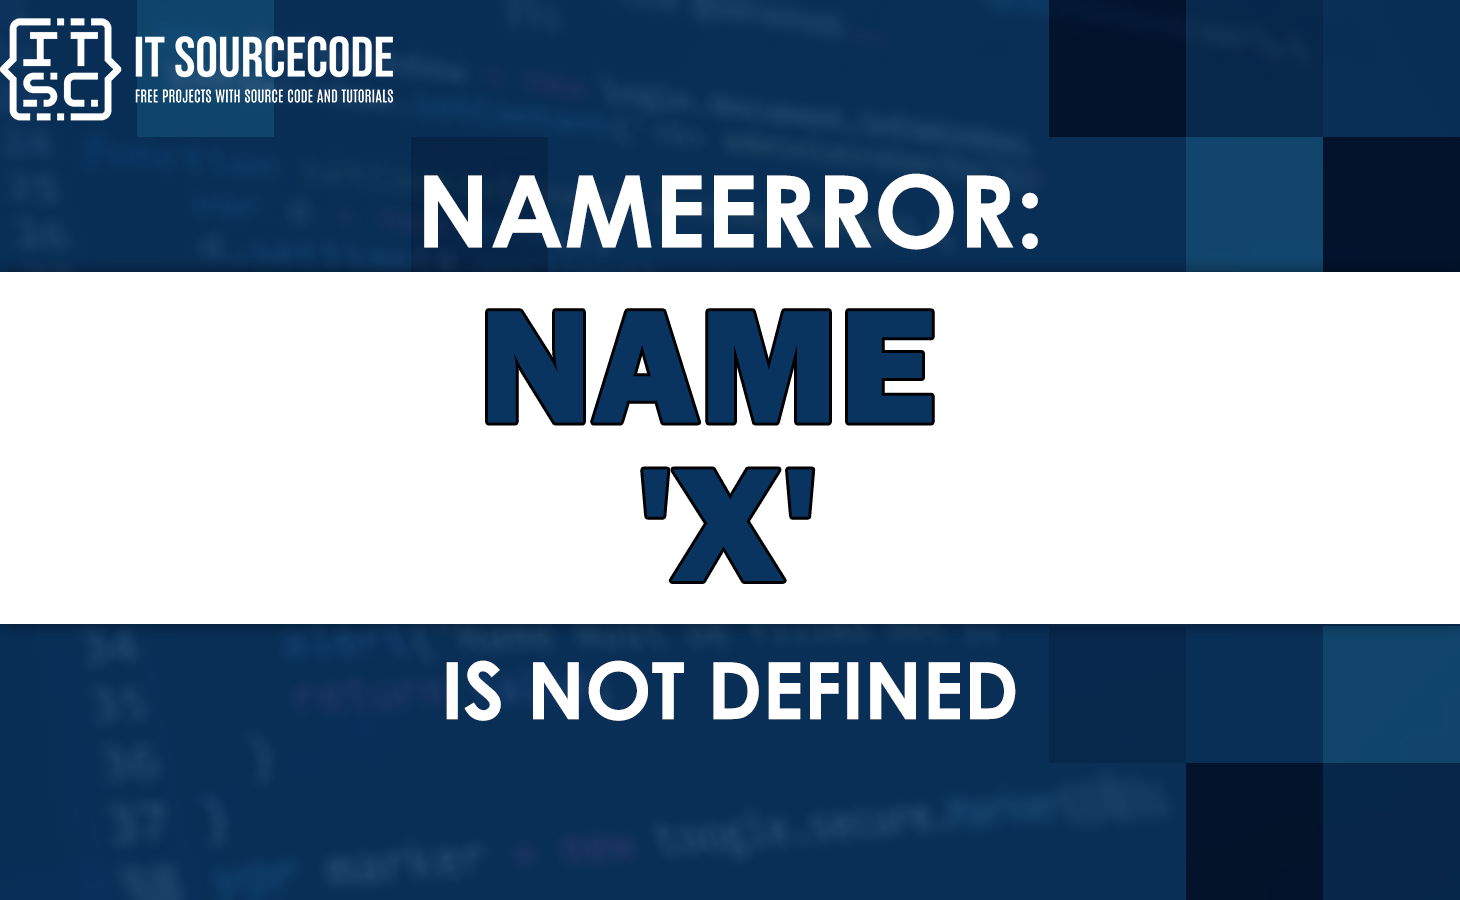 Nameerror name 'x' is not defined